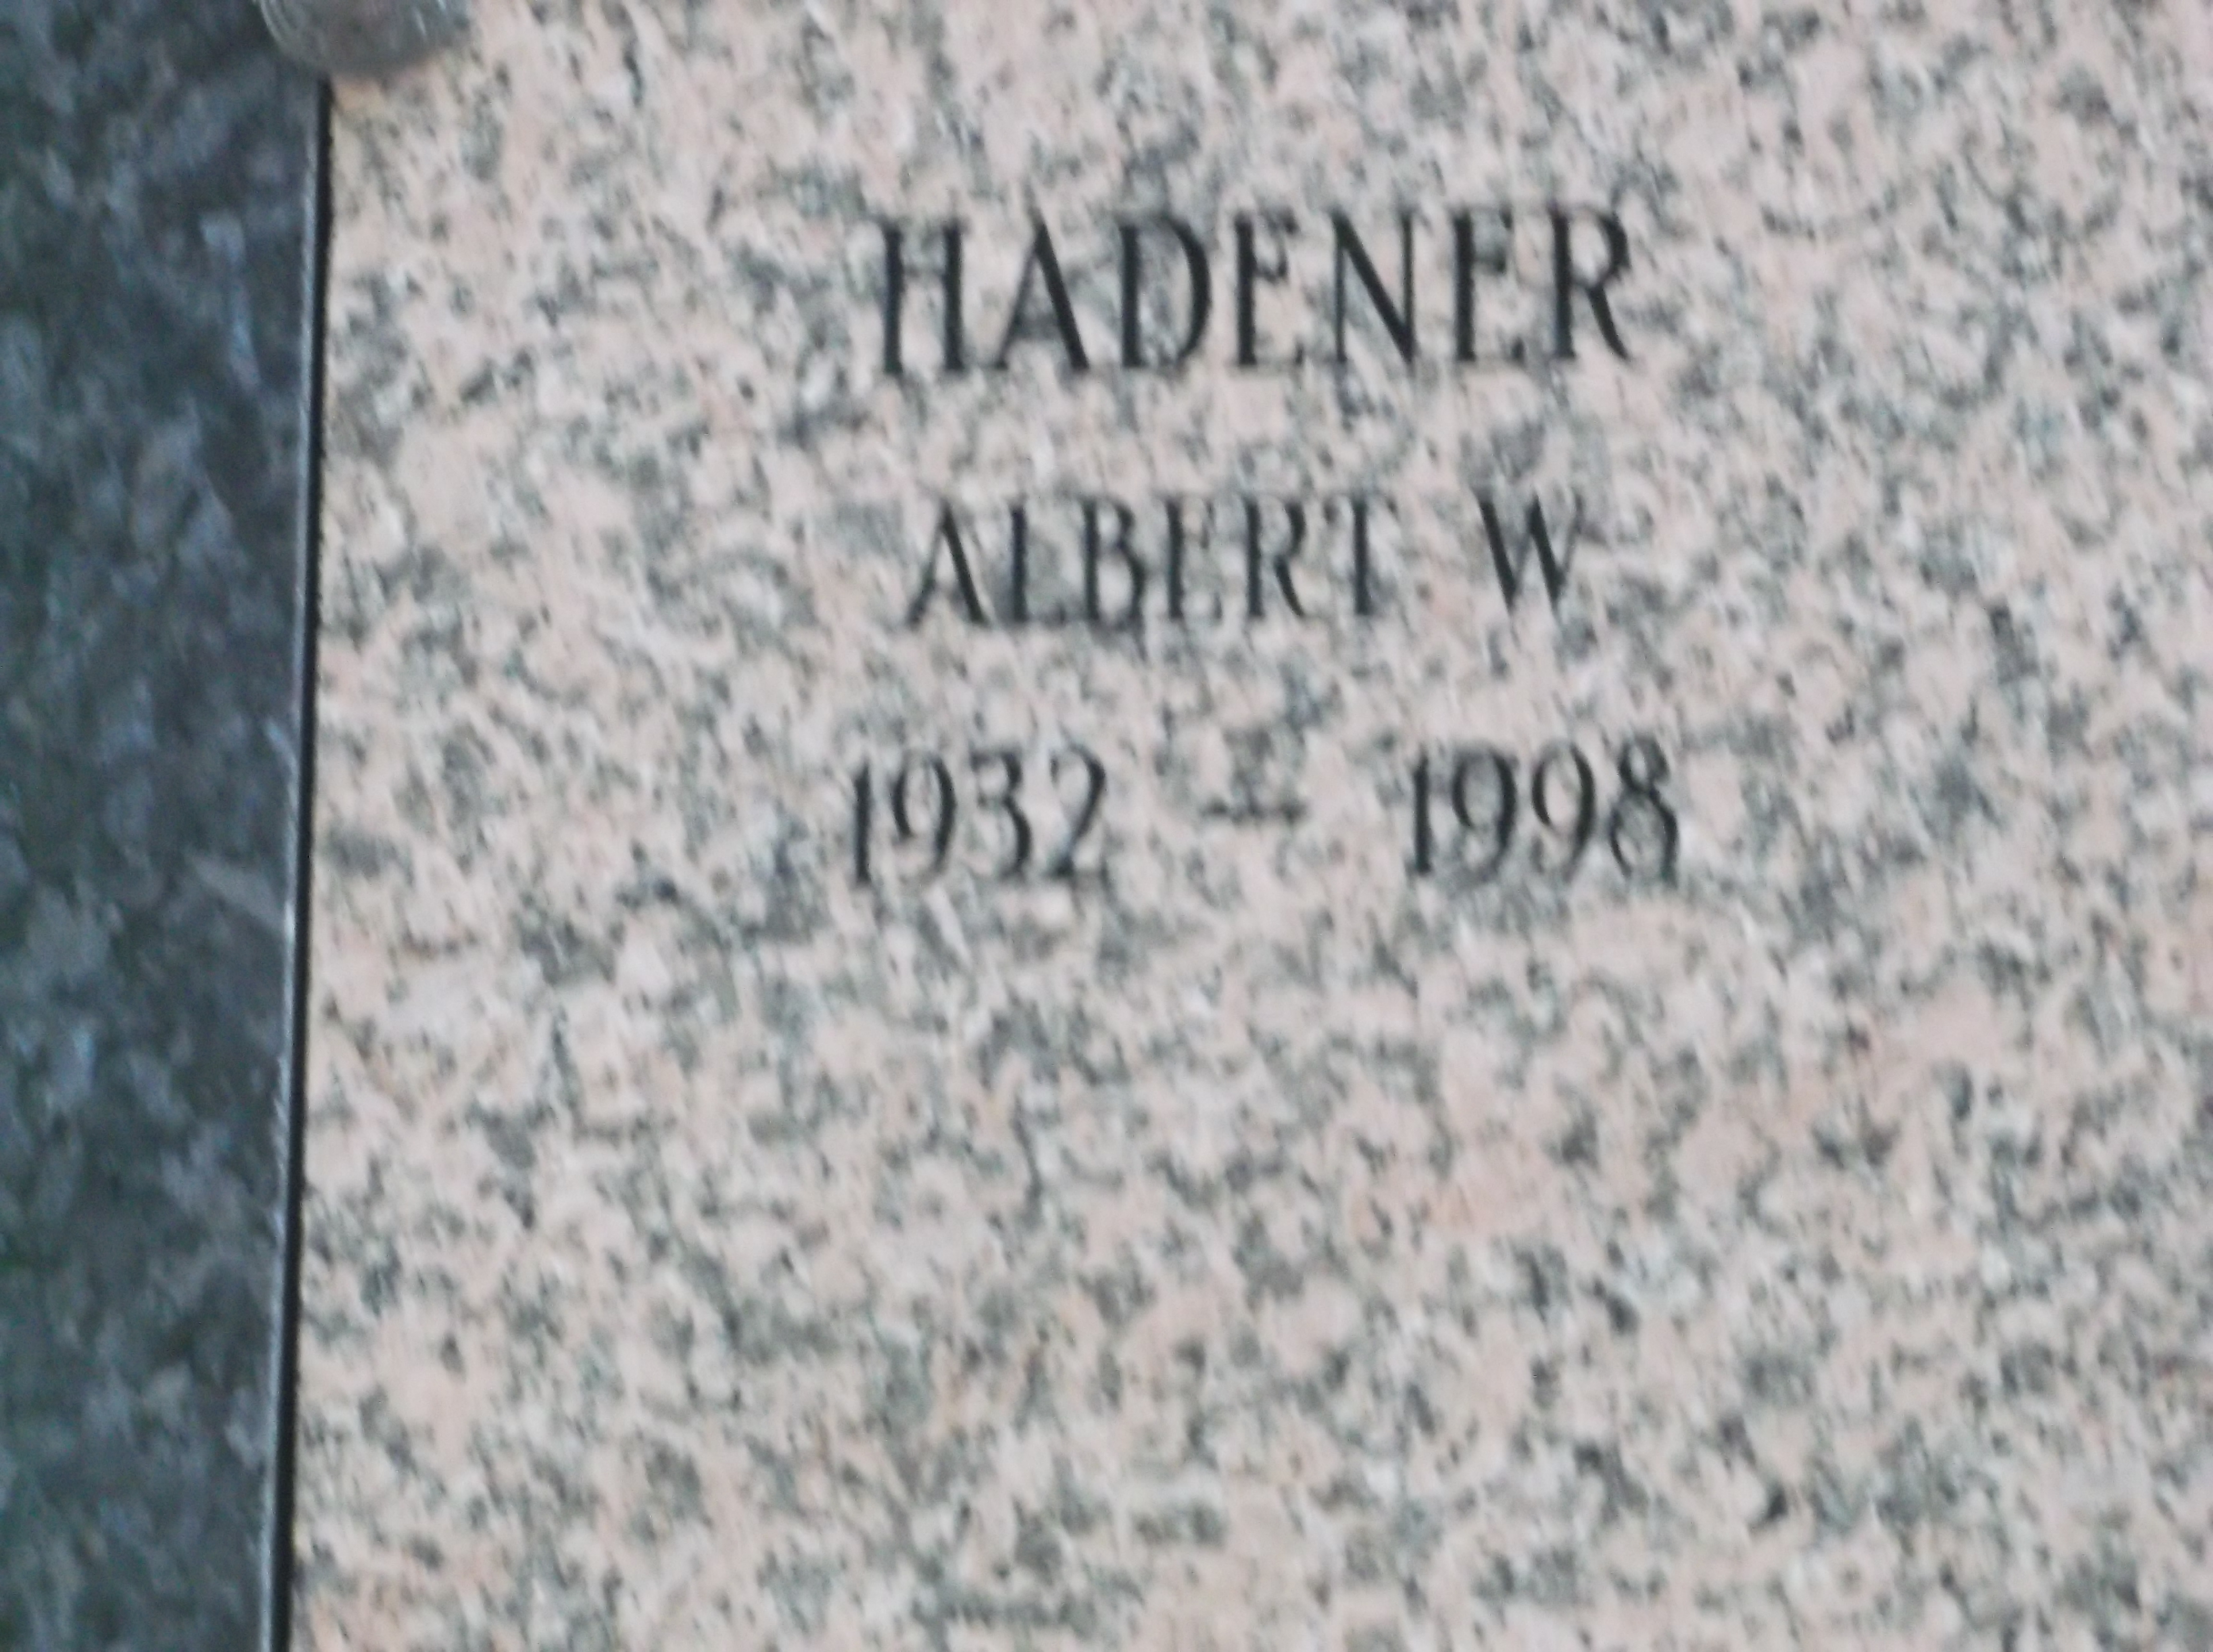 Albert W Hadener